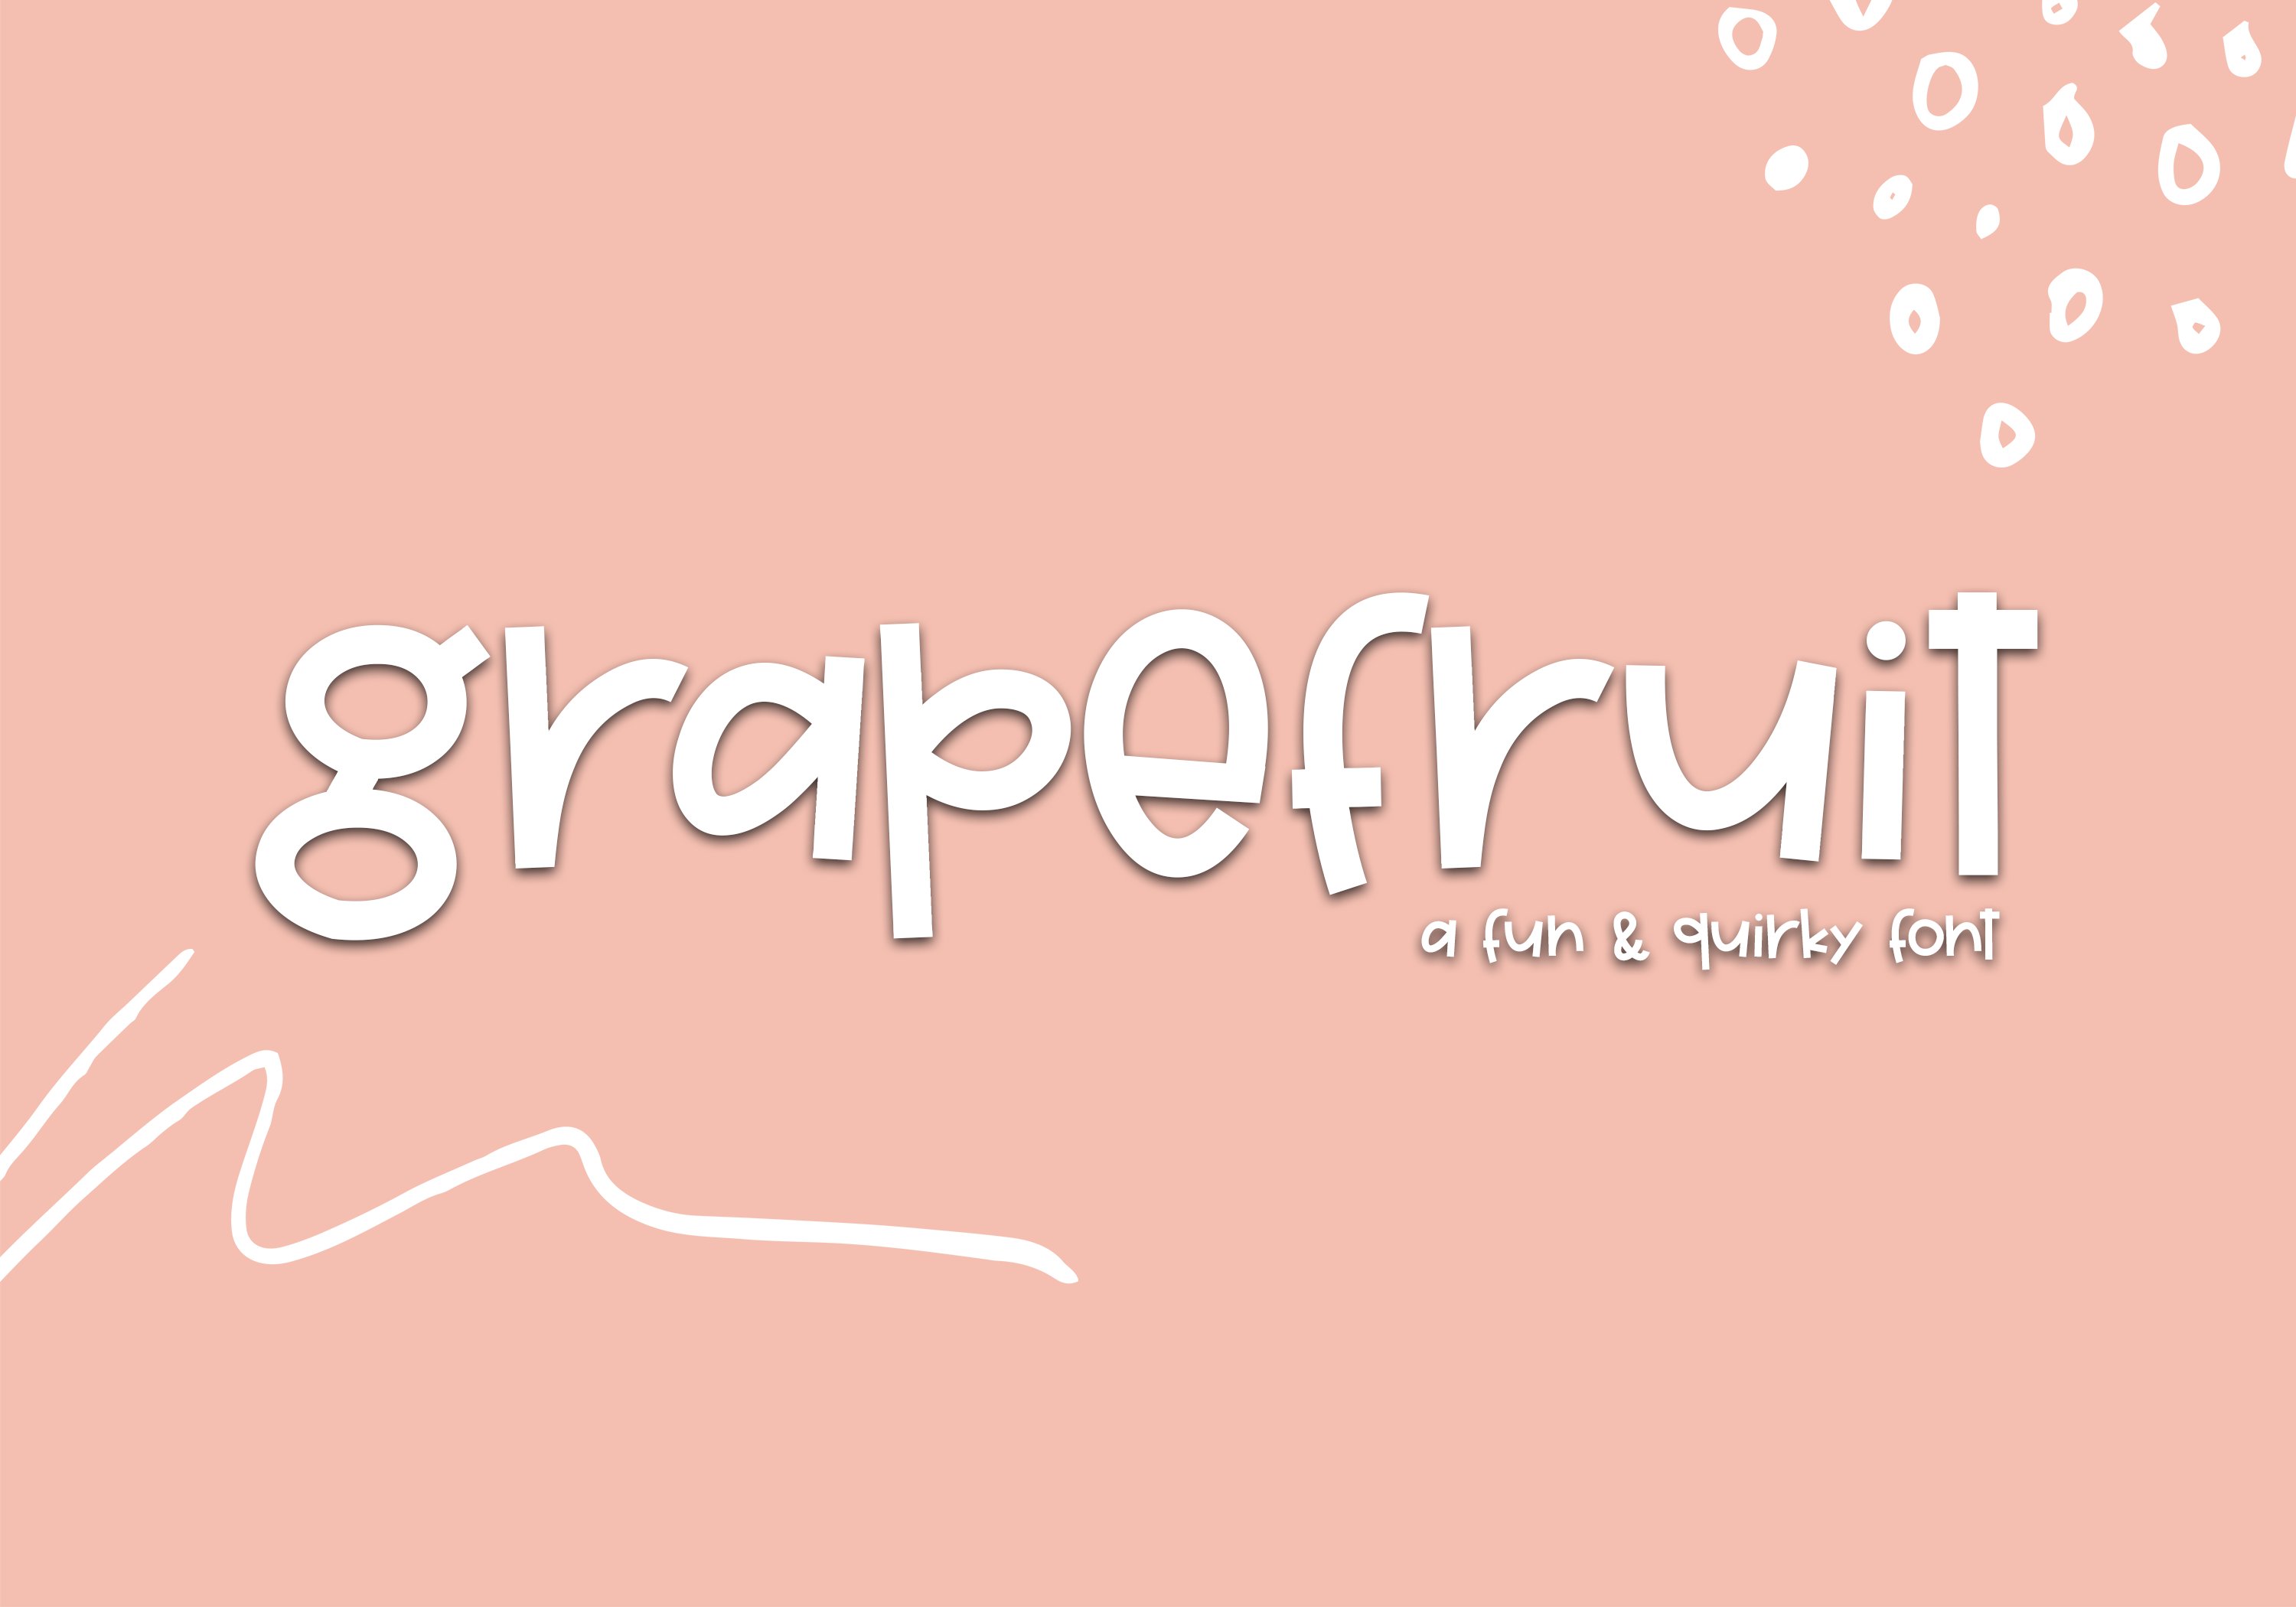 Grapefruit - A Fun Handwritten Font cover image.